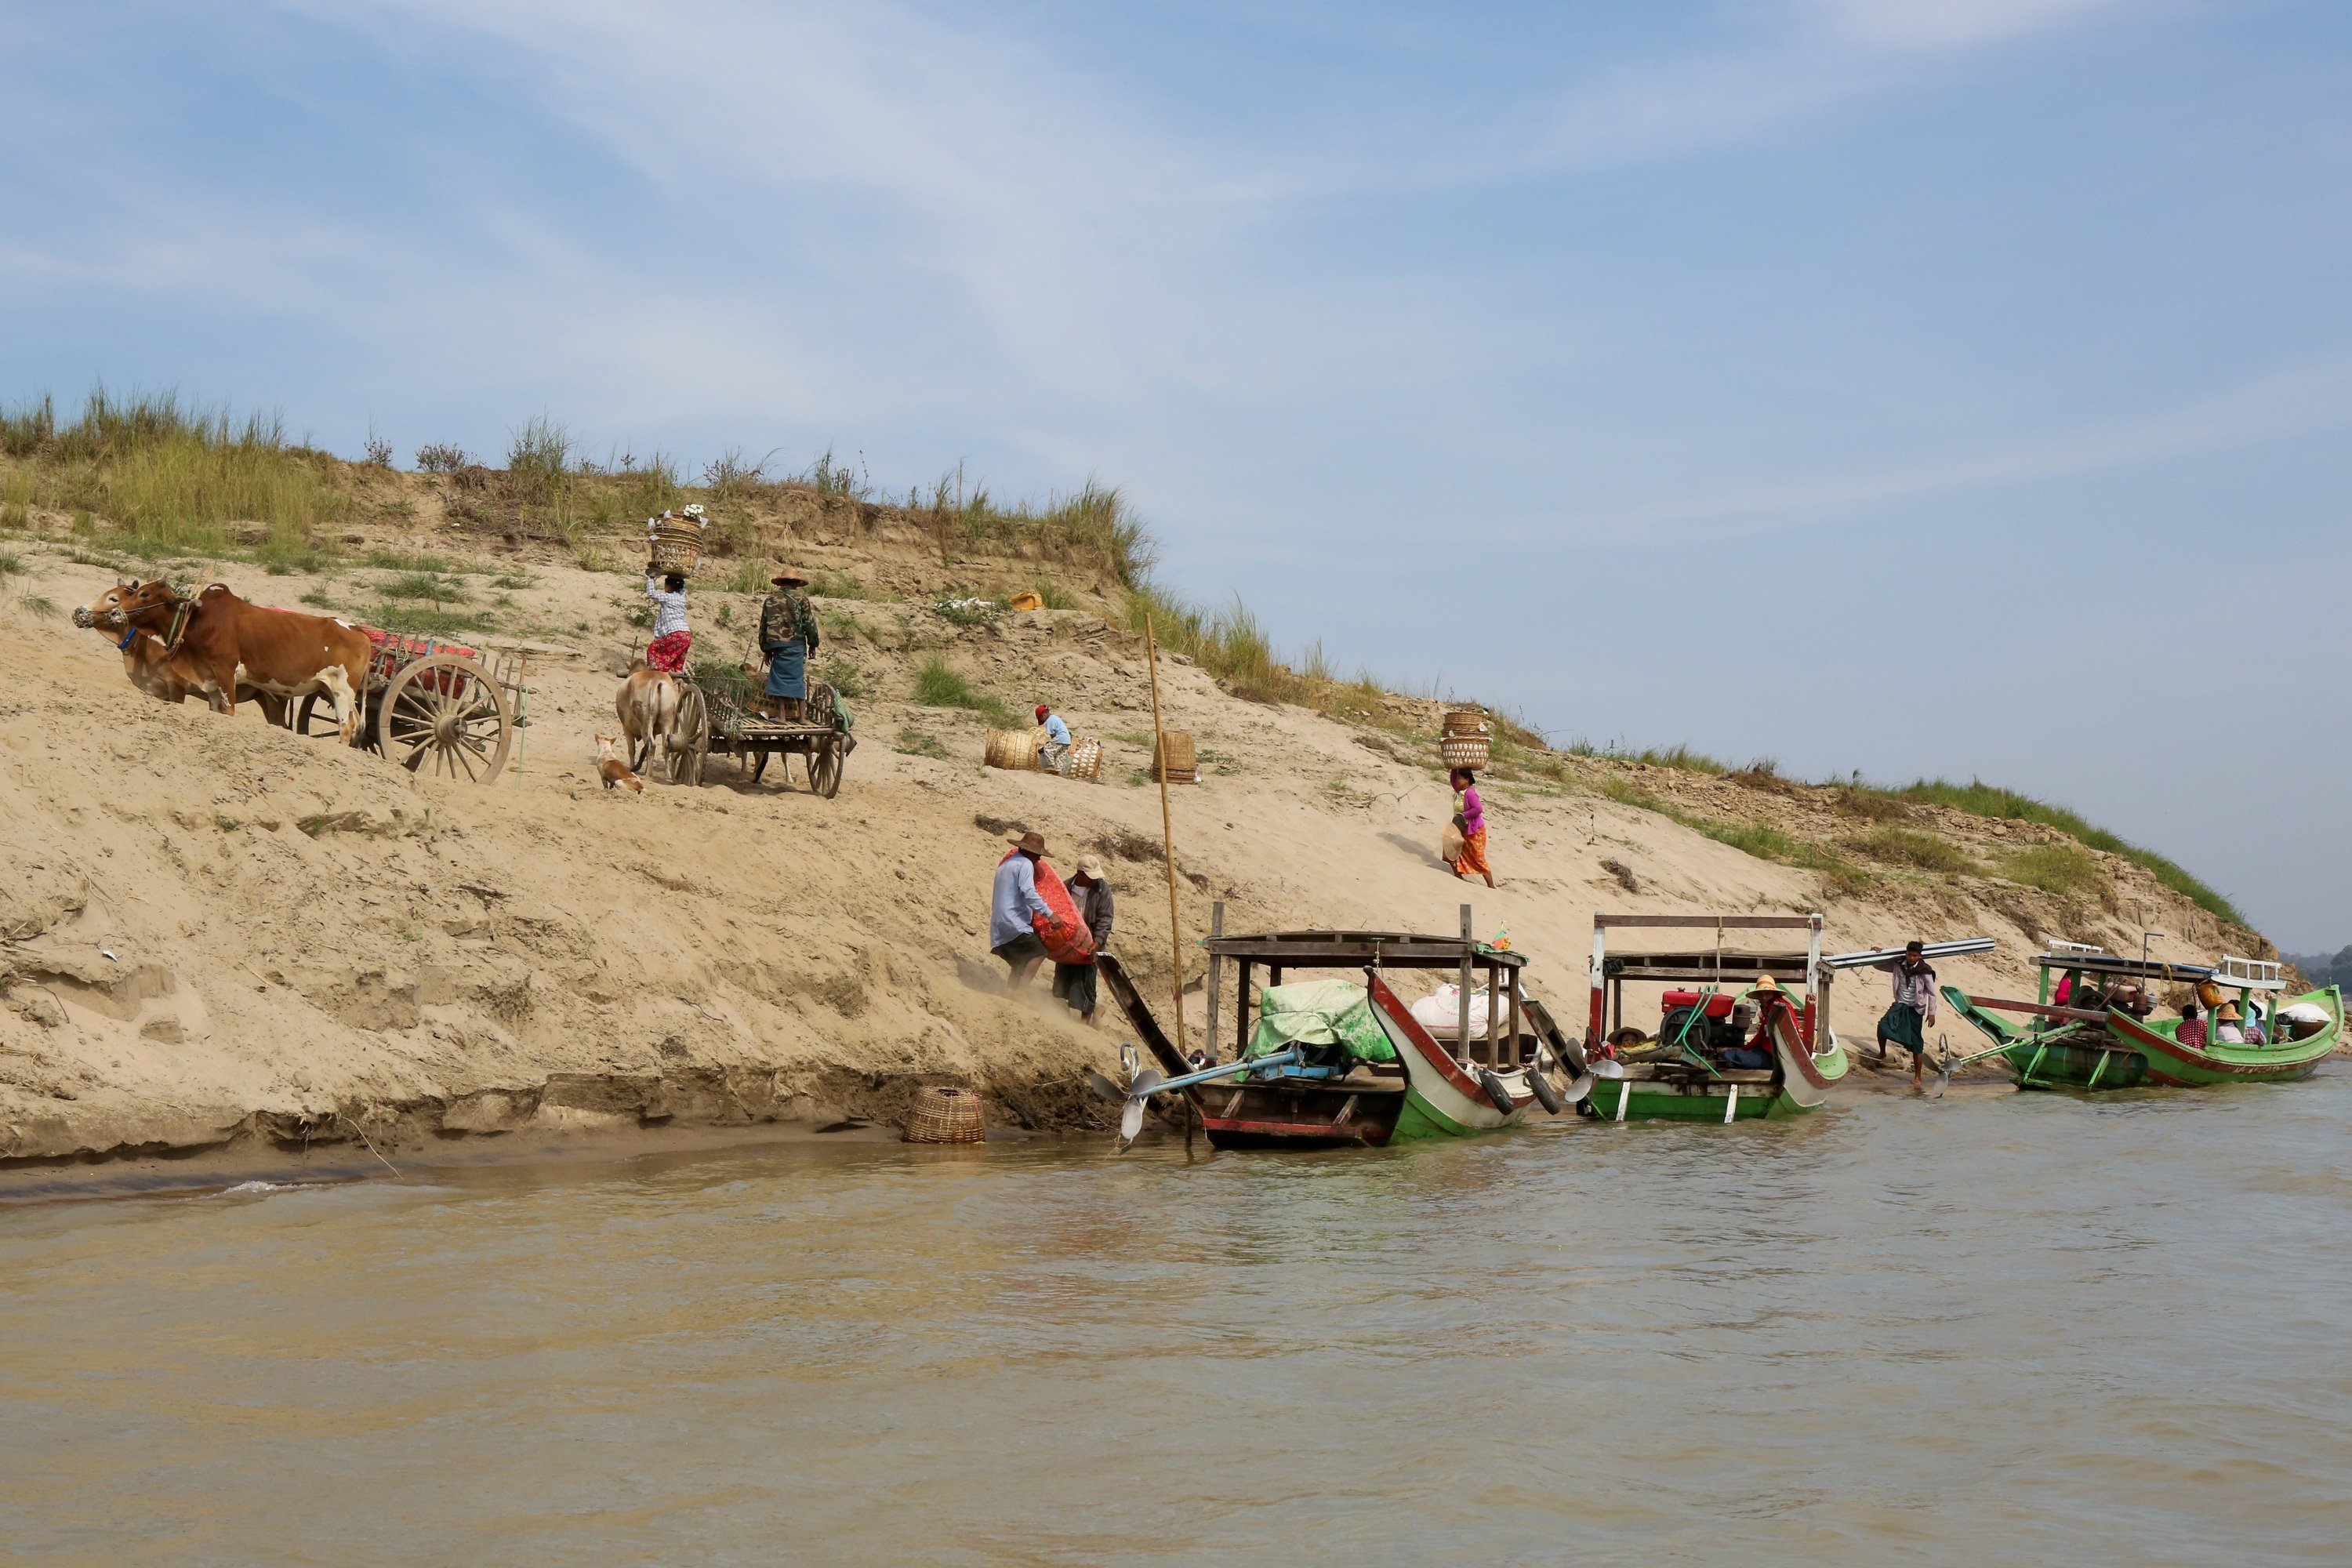 Myanmar’s Ayeyarwady River at risk from rampant sand mining